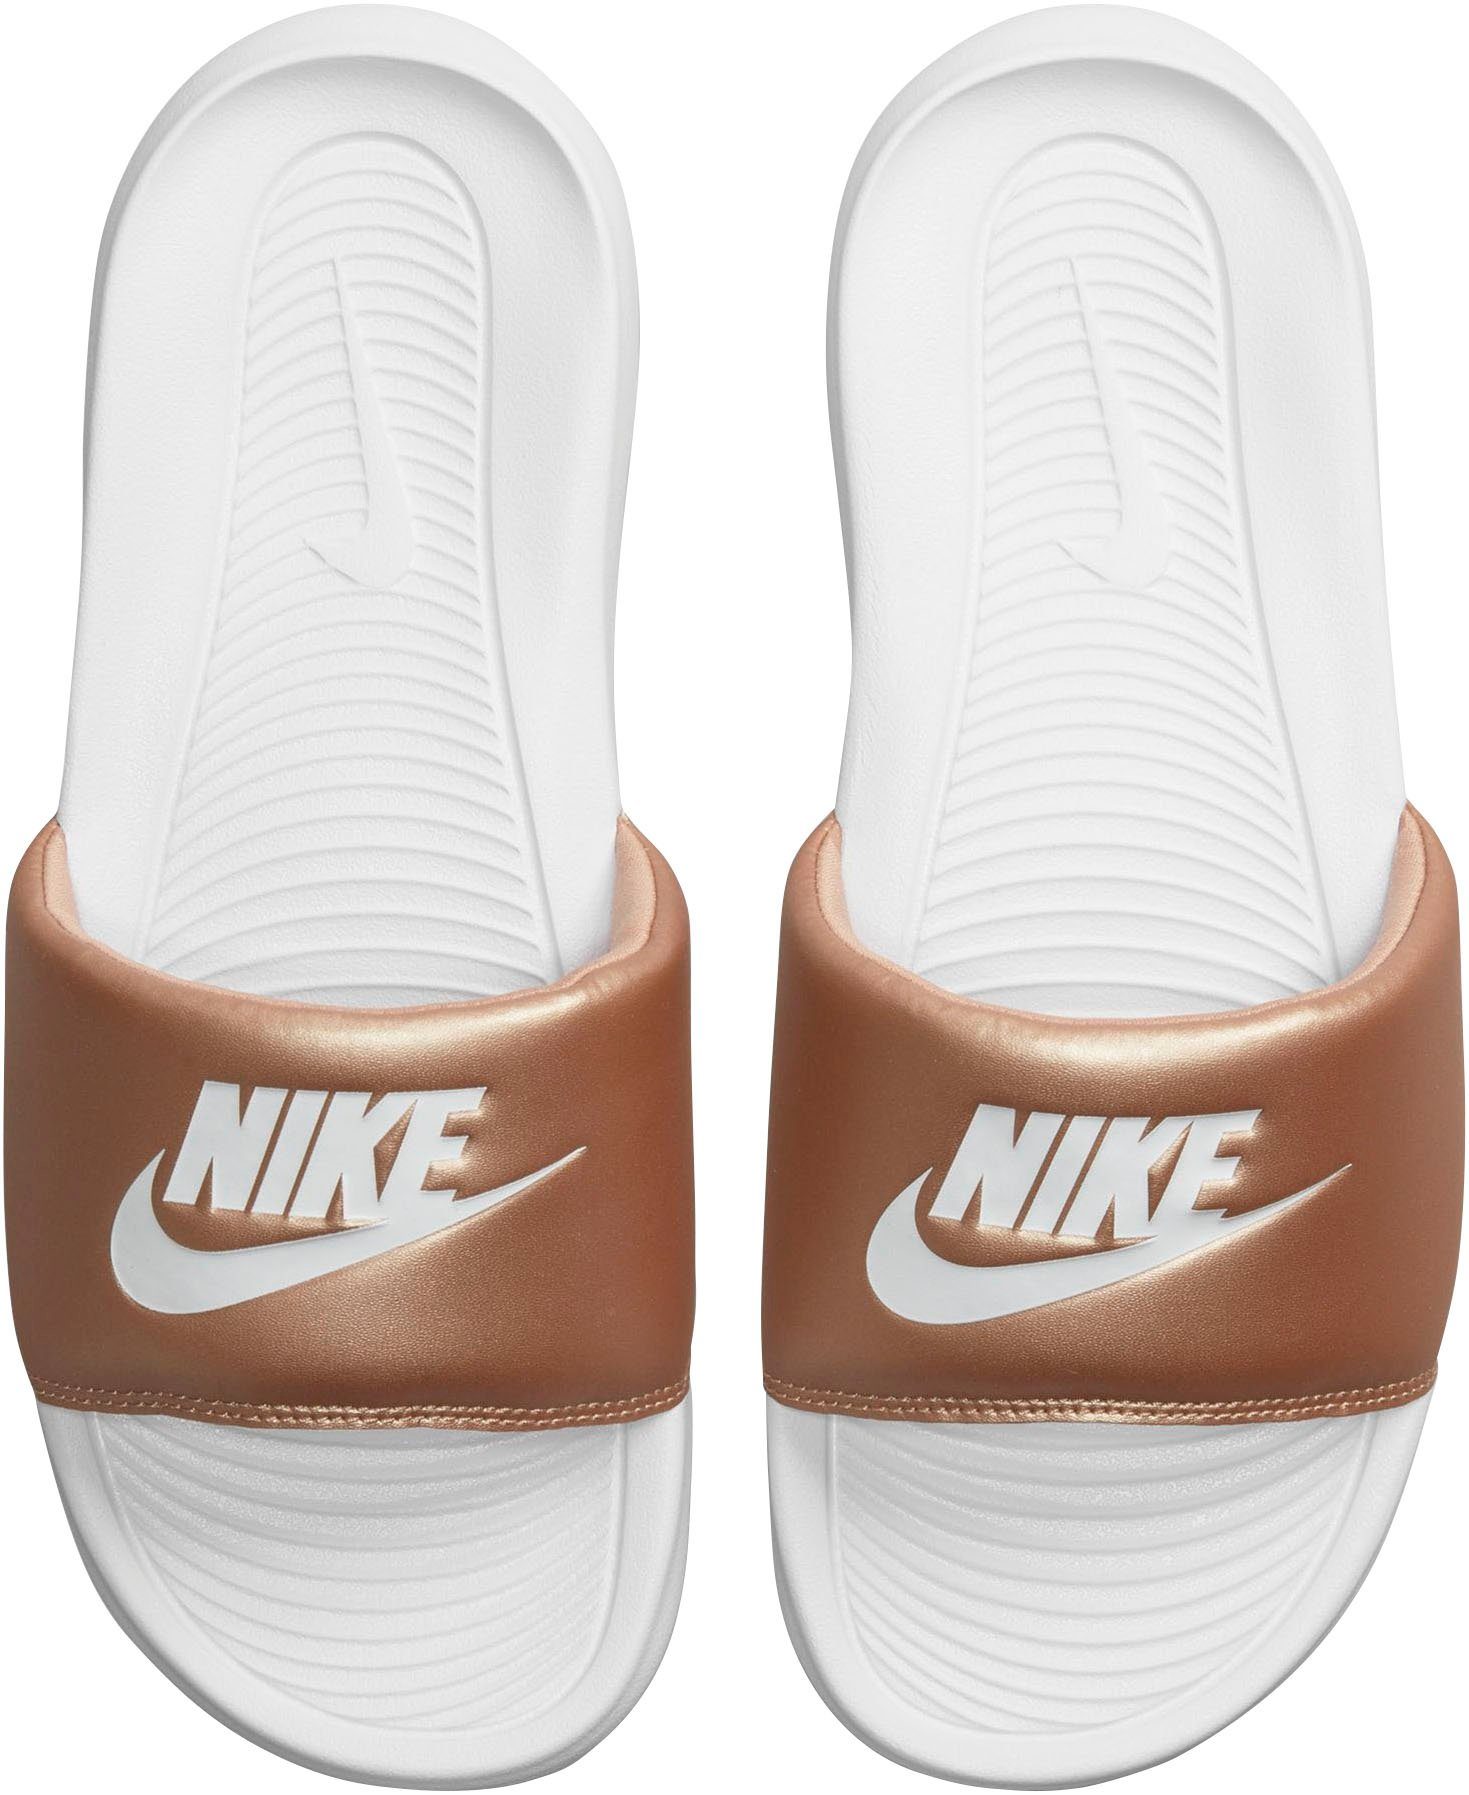 Nike Sportswear Victori One Badesandale roségoldfarben